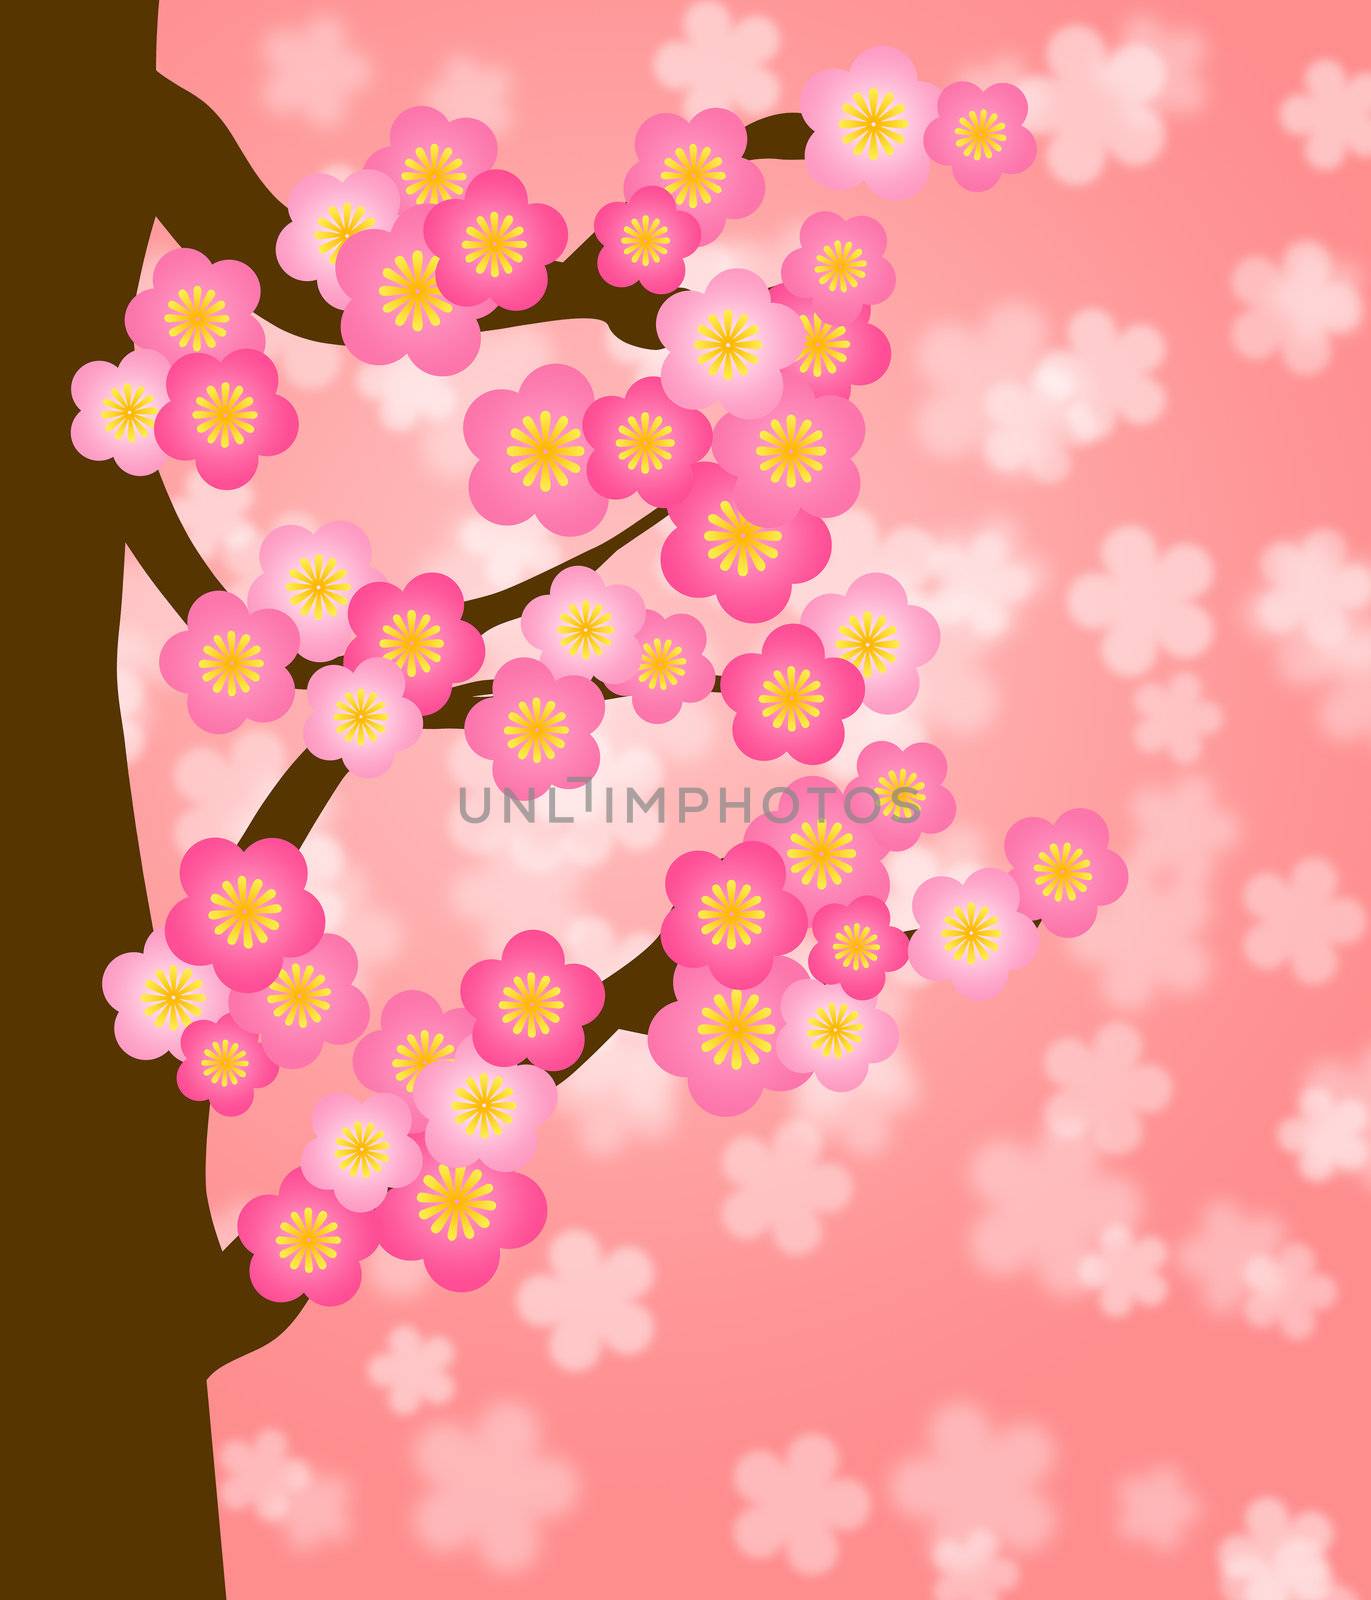 Flowering Cherry Blossom Tree in Spring Season Illustration